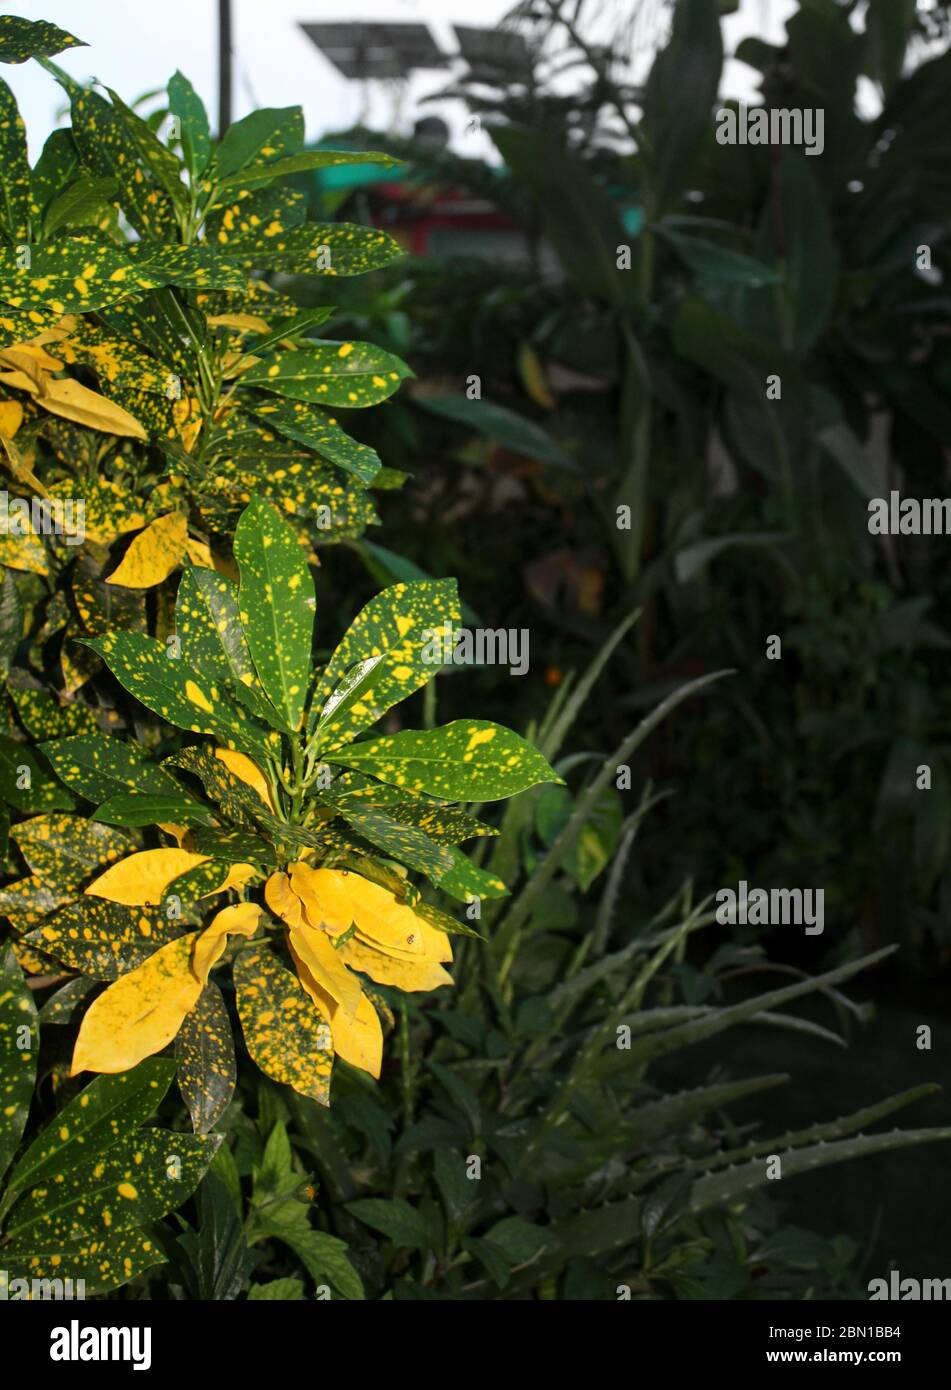 Golddust c, Codiaeum variegatum, variegated croton, Euphorbiaceae plant nature, growing in an organic home garden. Stock Photo